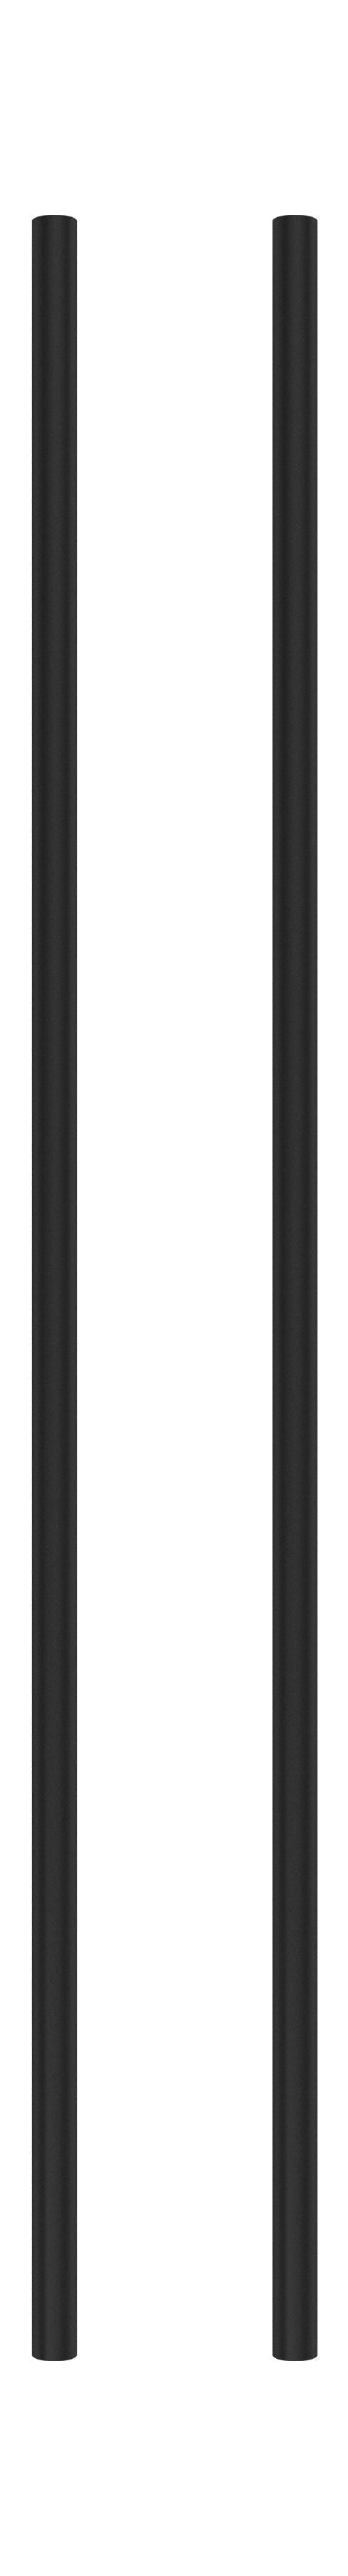 Sistema de estanterías Moebe/Lata de estantería de pared 85 cm Negro, conjunto de 2